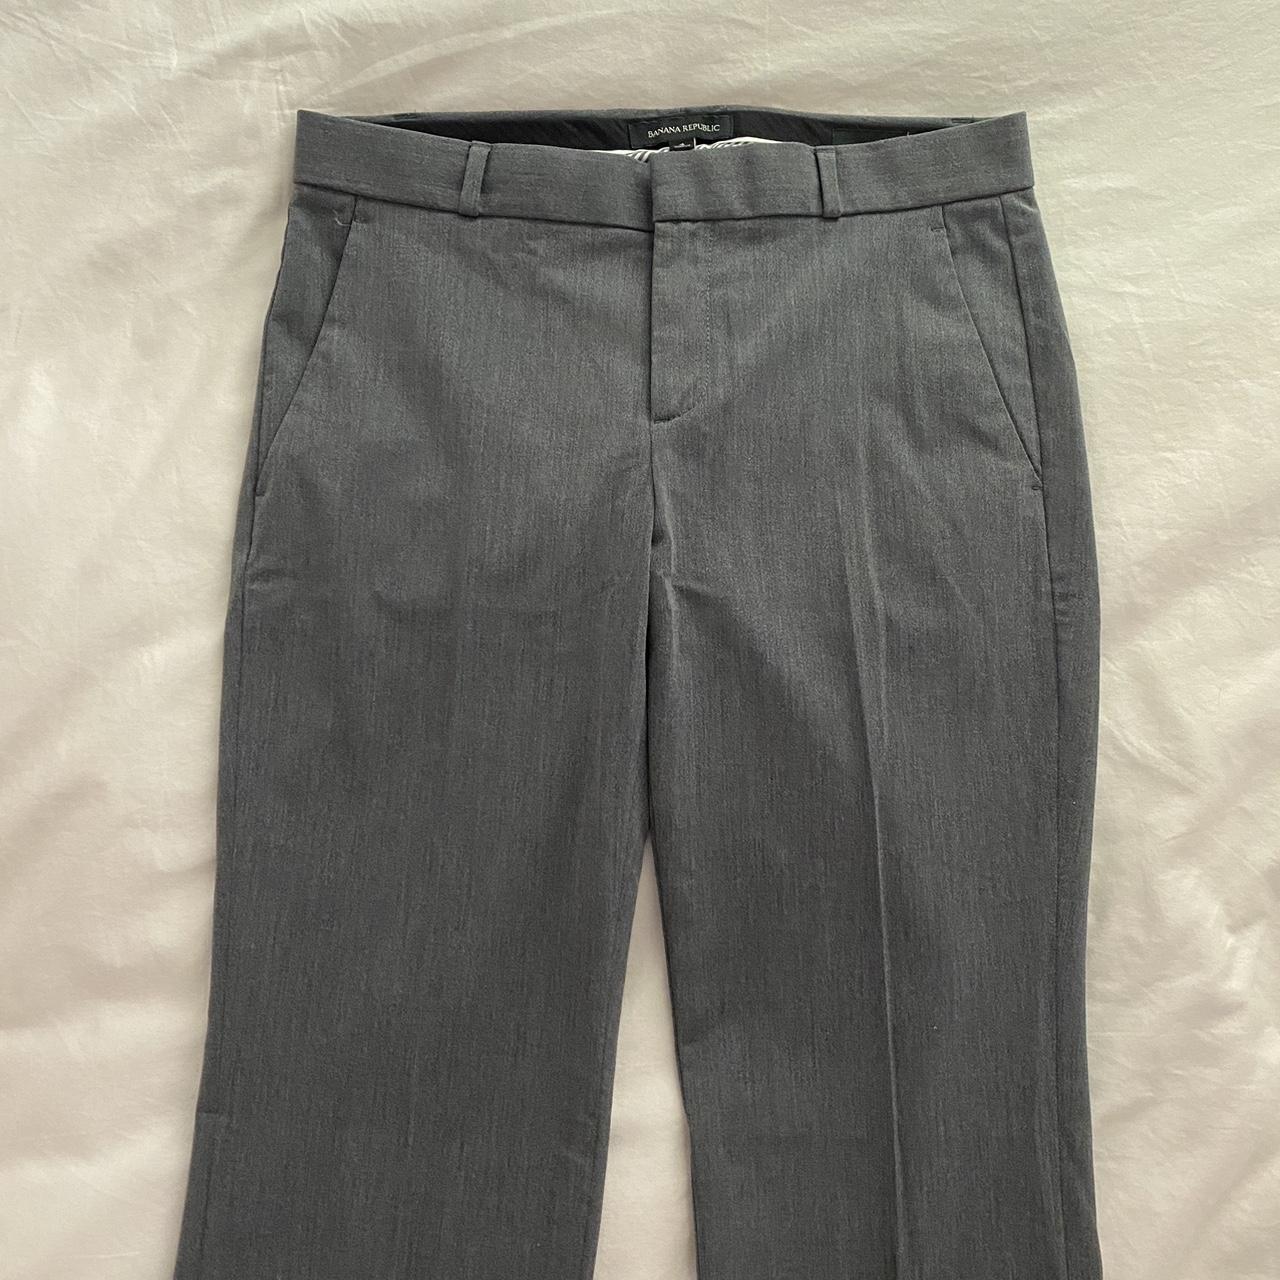 Banana Republic grey pants (similar to Aritzia... - Depop